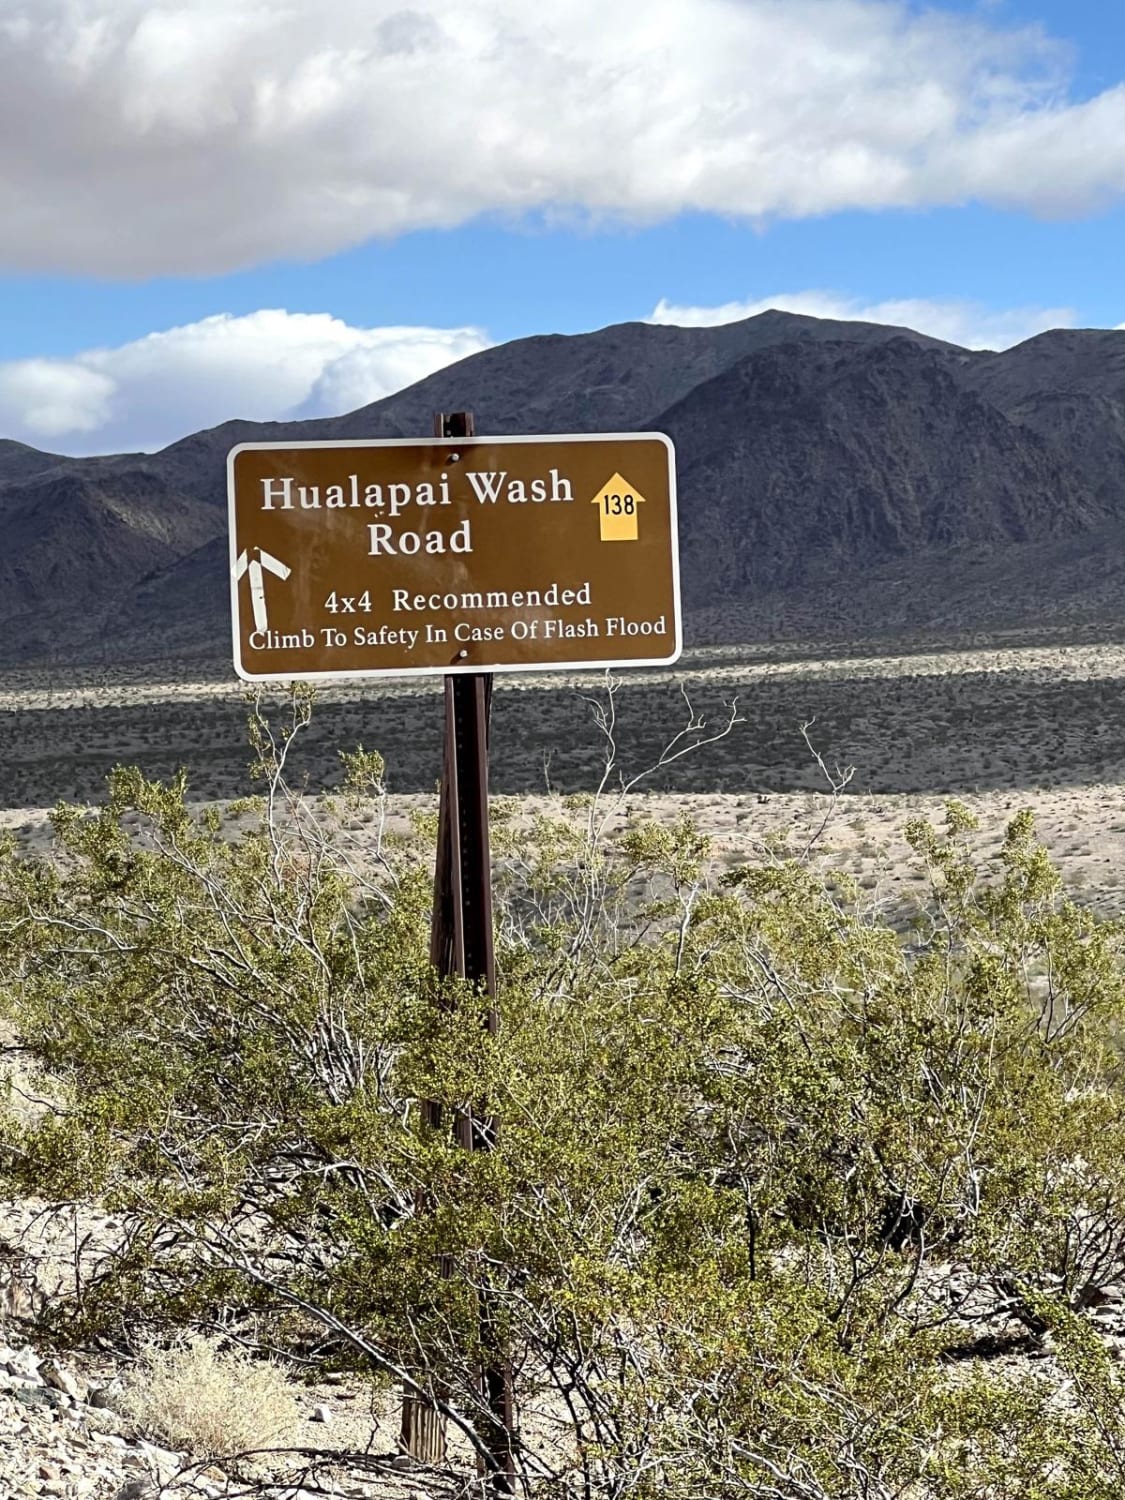 Hualapai Wash Trail